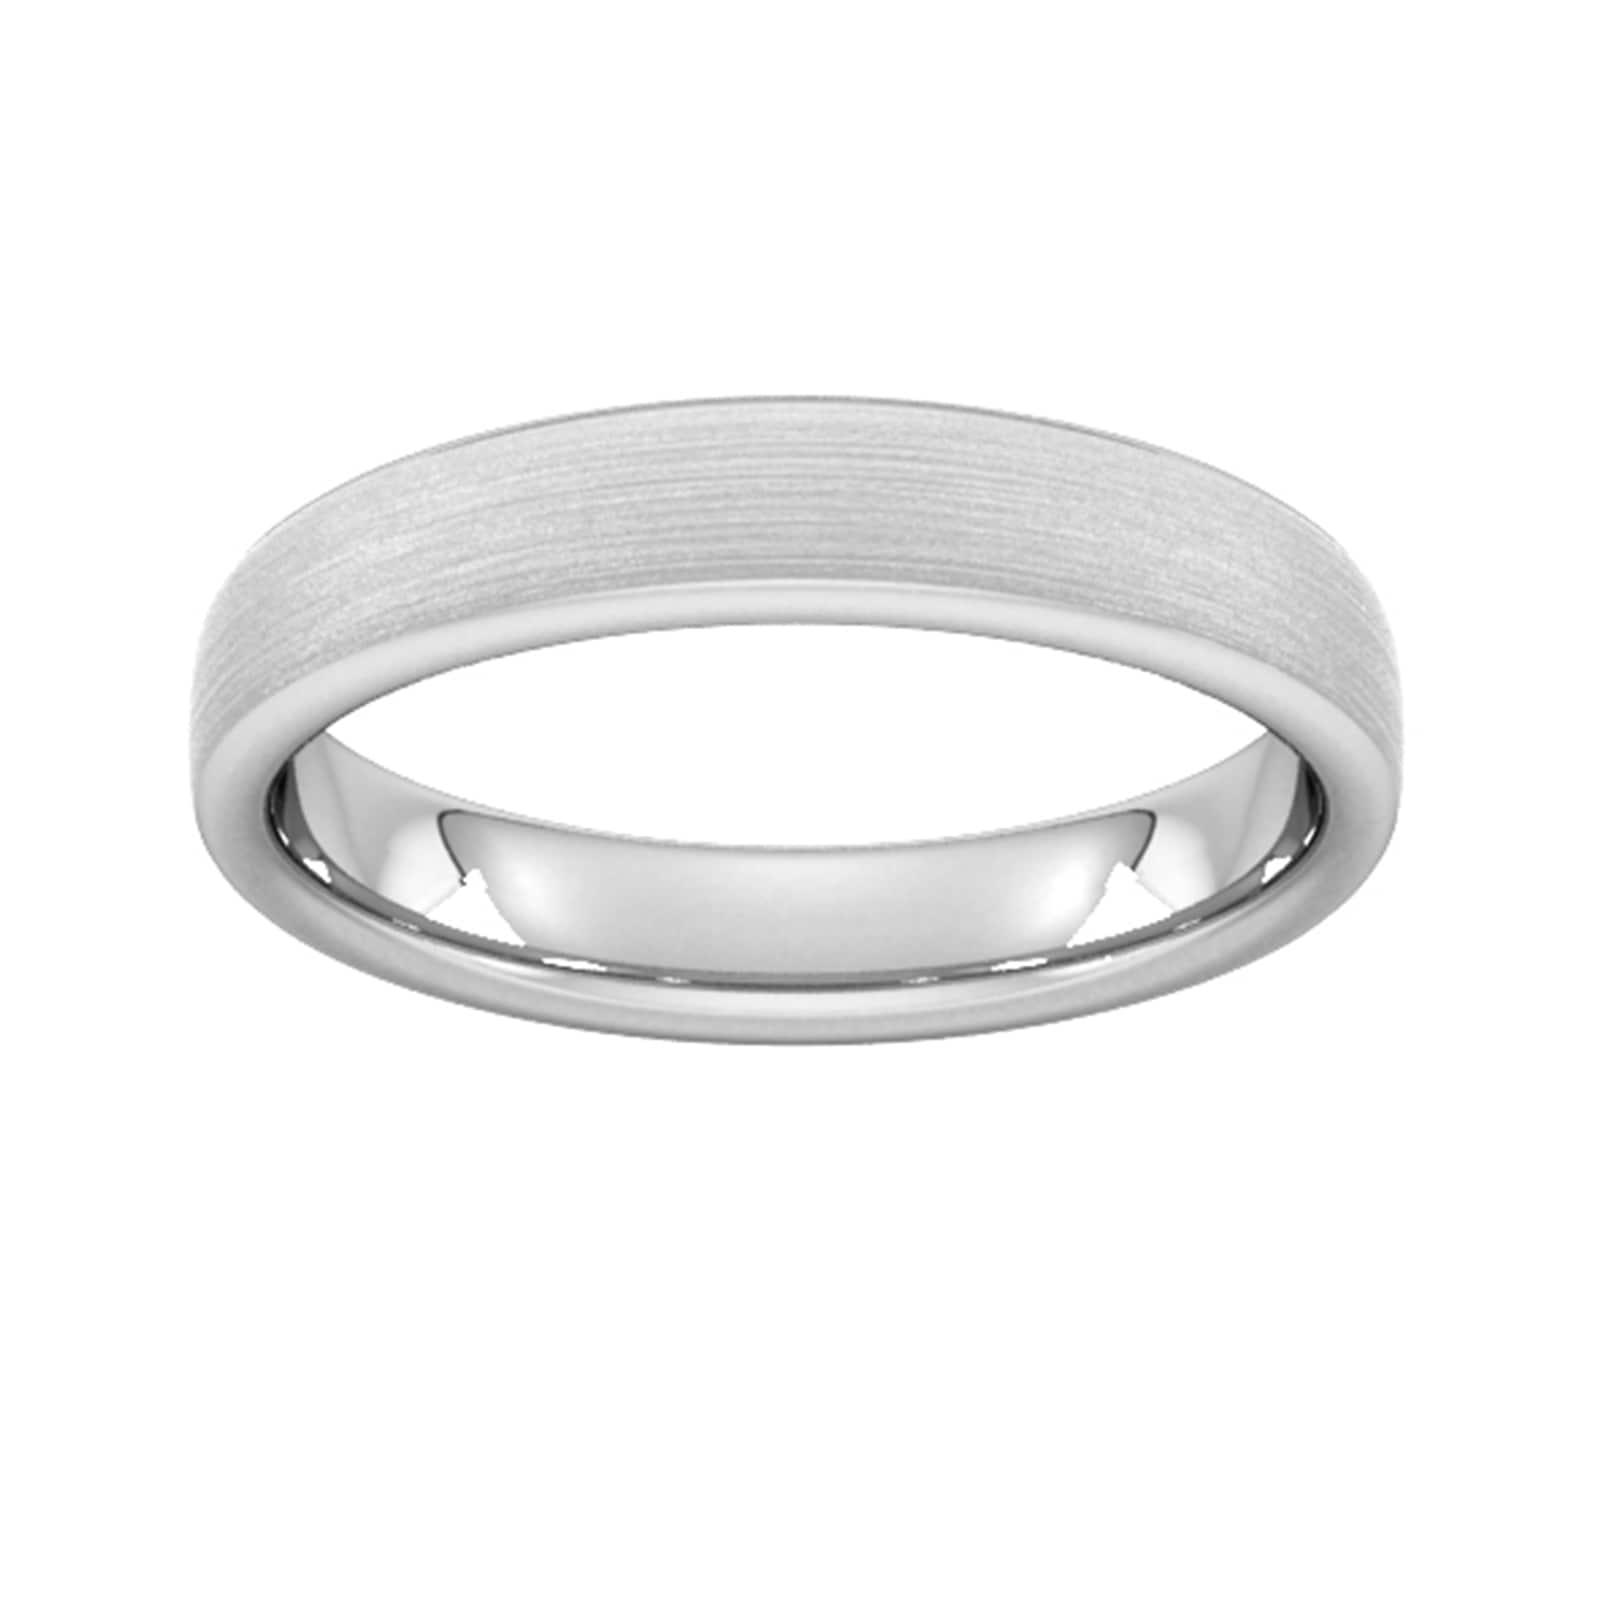 4mm Traditional Court Standard Matt Finished Wedding Ring In 950 Palladium - Ring Size M